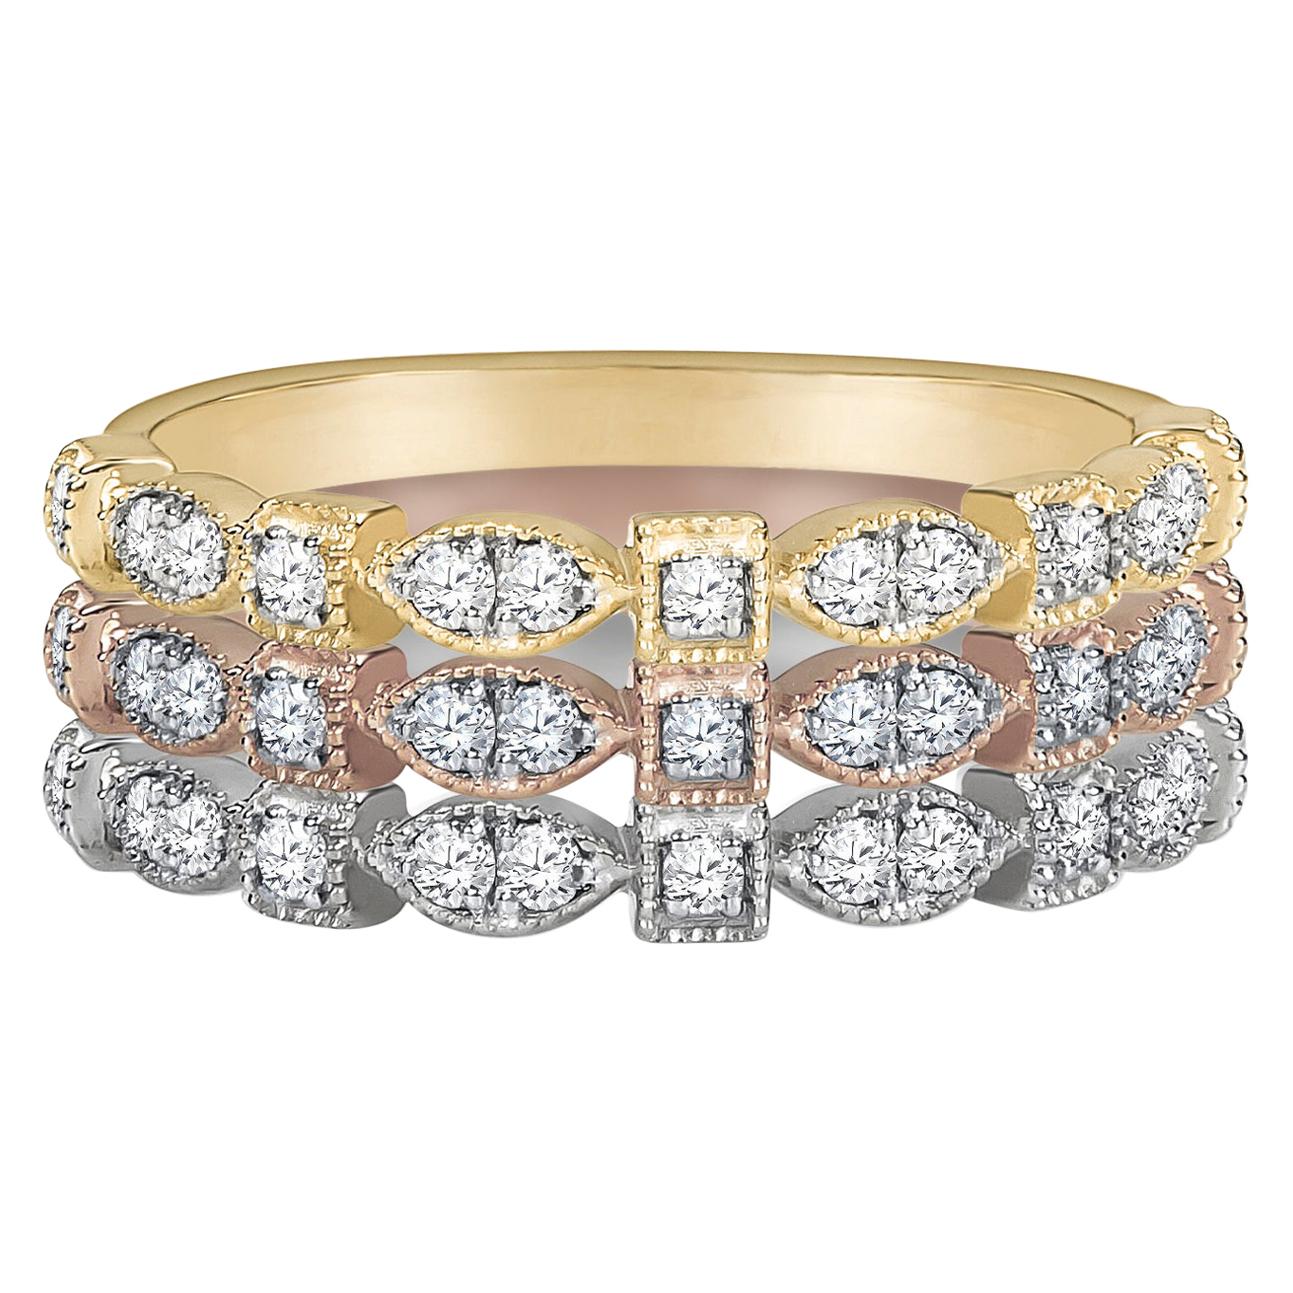 0.16 Carat 14 Karat Gold Diamond Stackable Ring in White, Yellow and Rose Gold